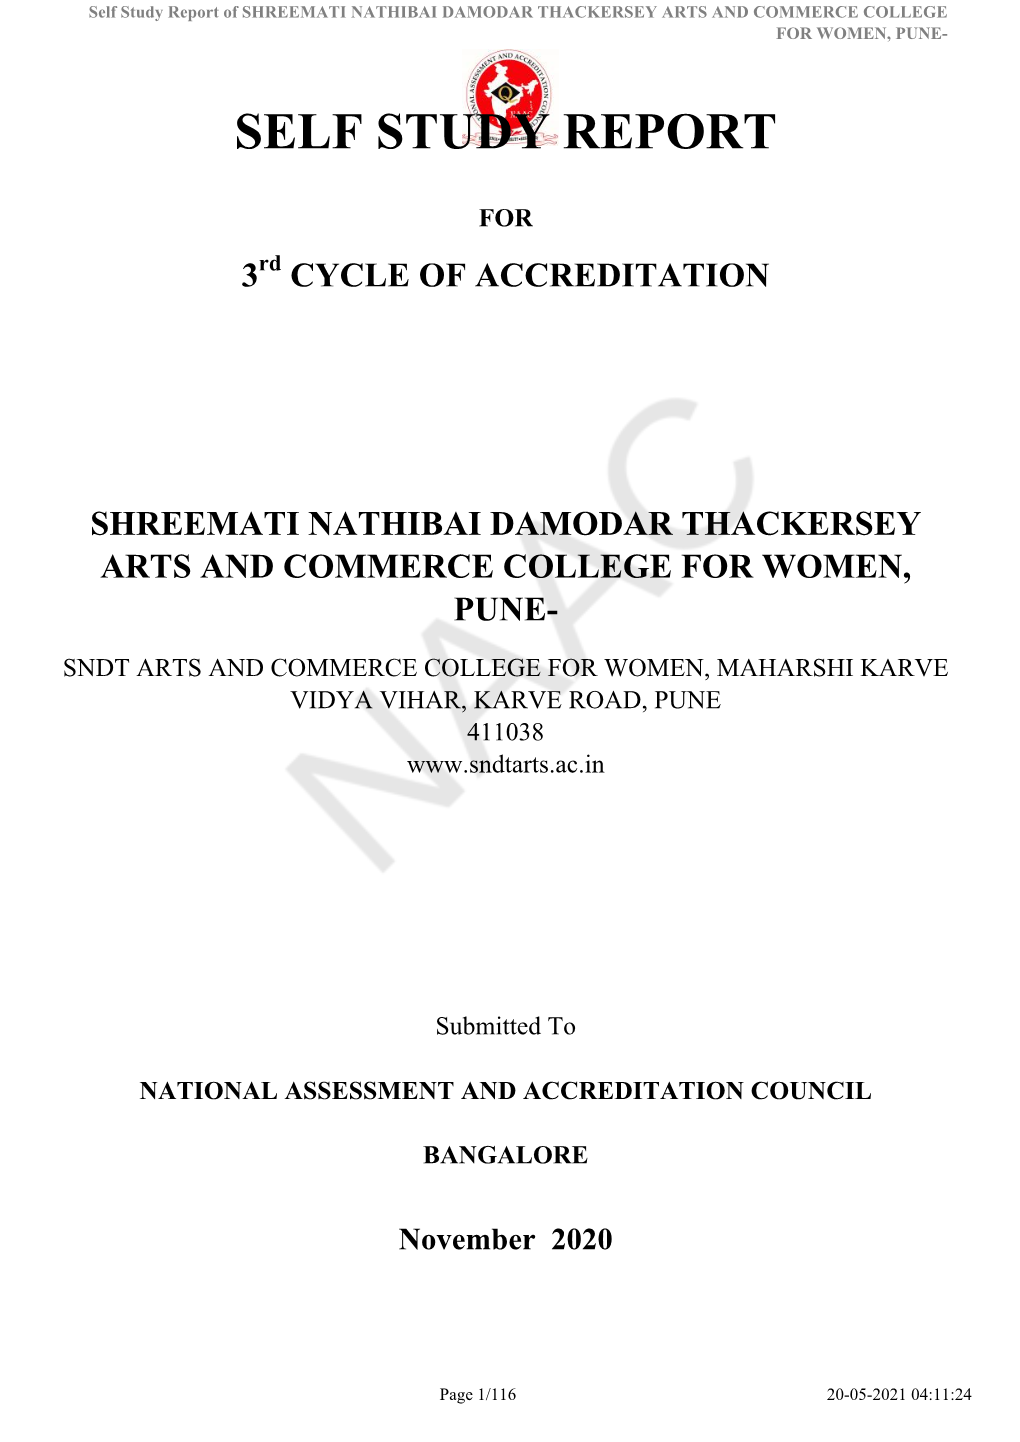 Self Study Report of SHREEMATI NATHIBAI DAMODAR THACKERSEY ARTS and COMMERCE COLLEGE for WOMEN, PUNE